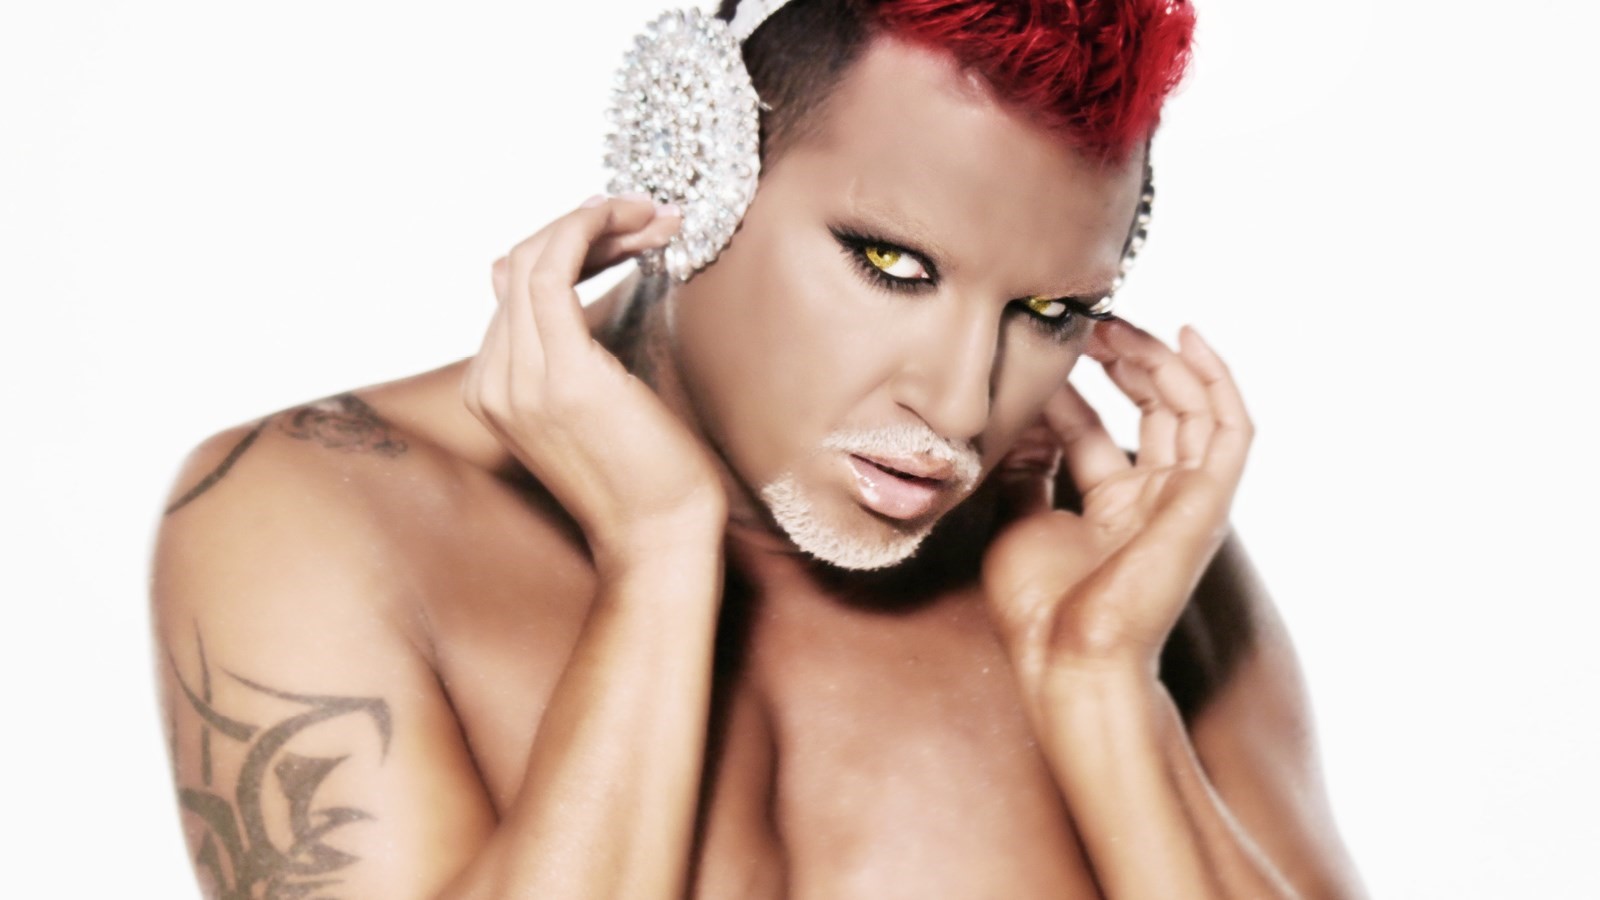 Tien jaar US dollar je bent The gay 'Gypsy' who became Bulgaria's biggest star | Dazed